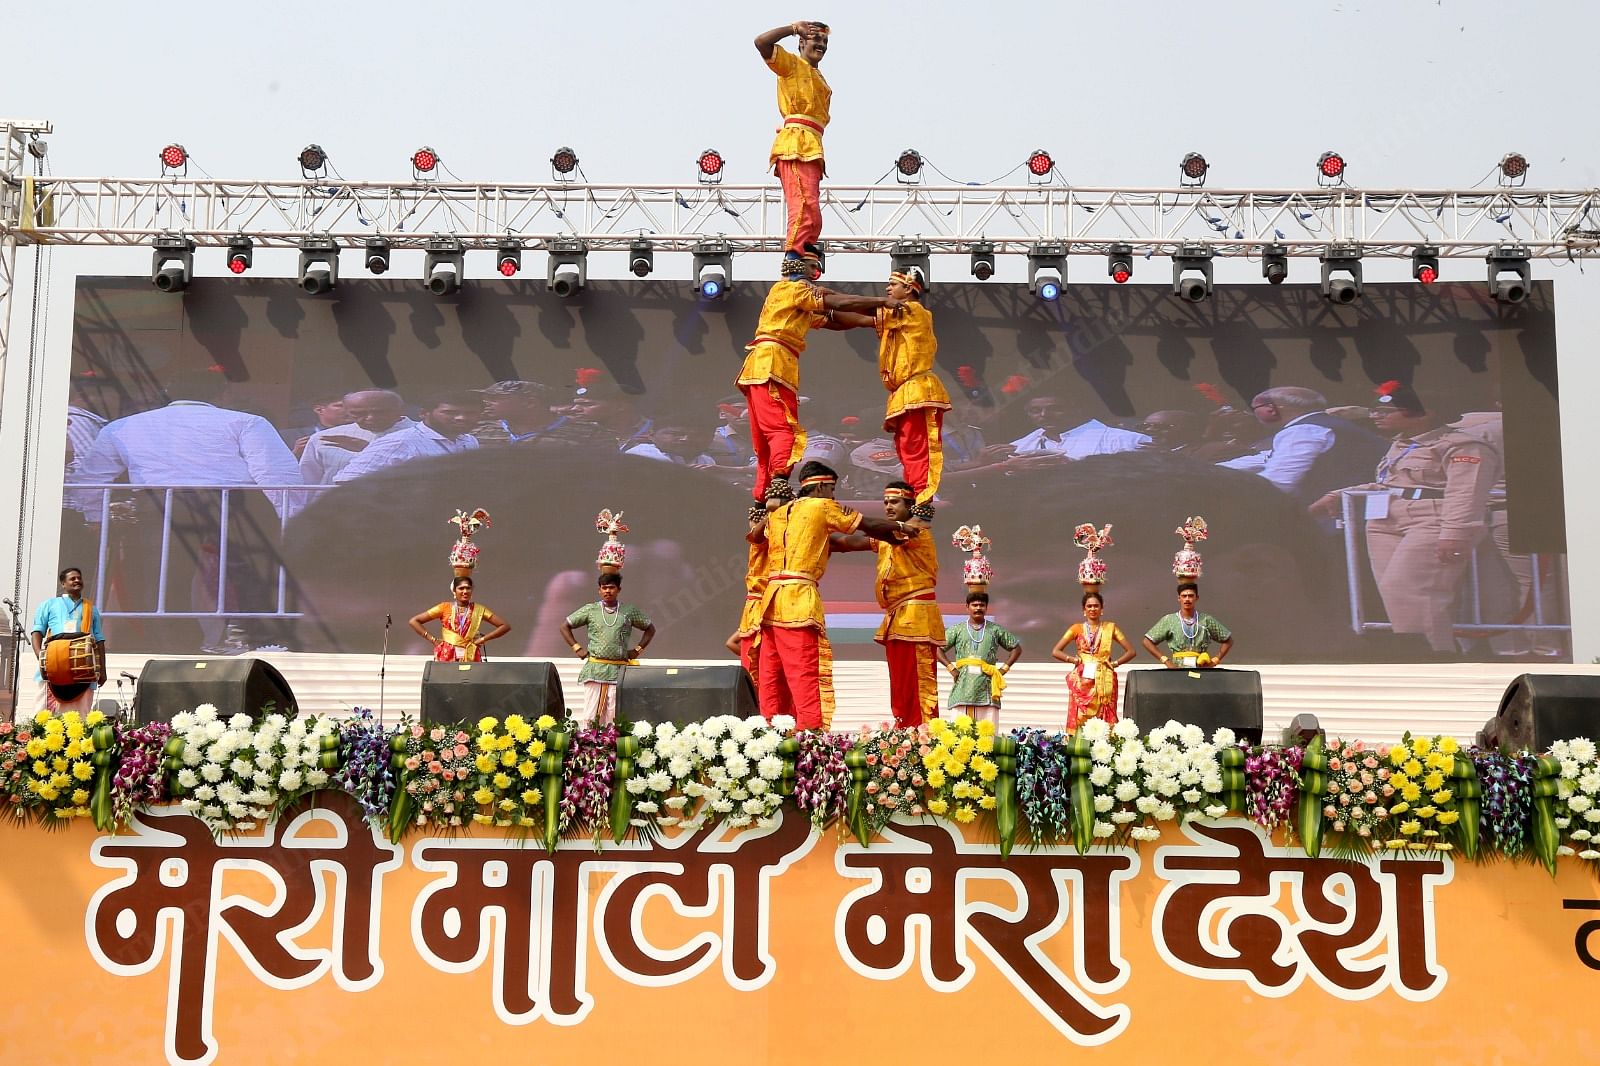 A performance at the 'Meri Maati Mera Desh' ceremony Monday | Photo: Suraj Singh Bisht | ThePrint